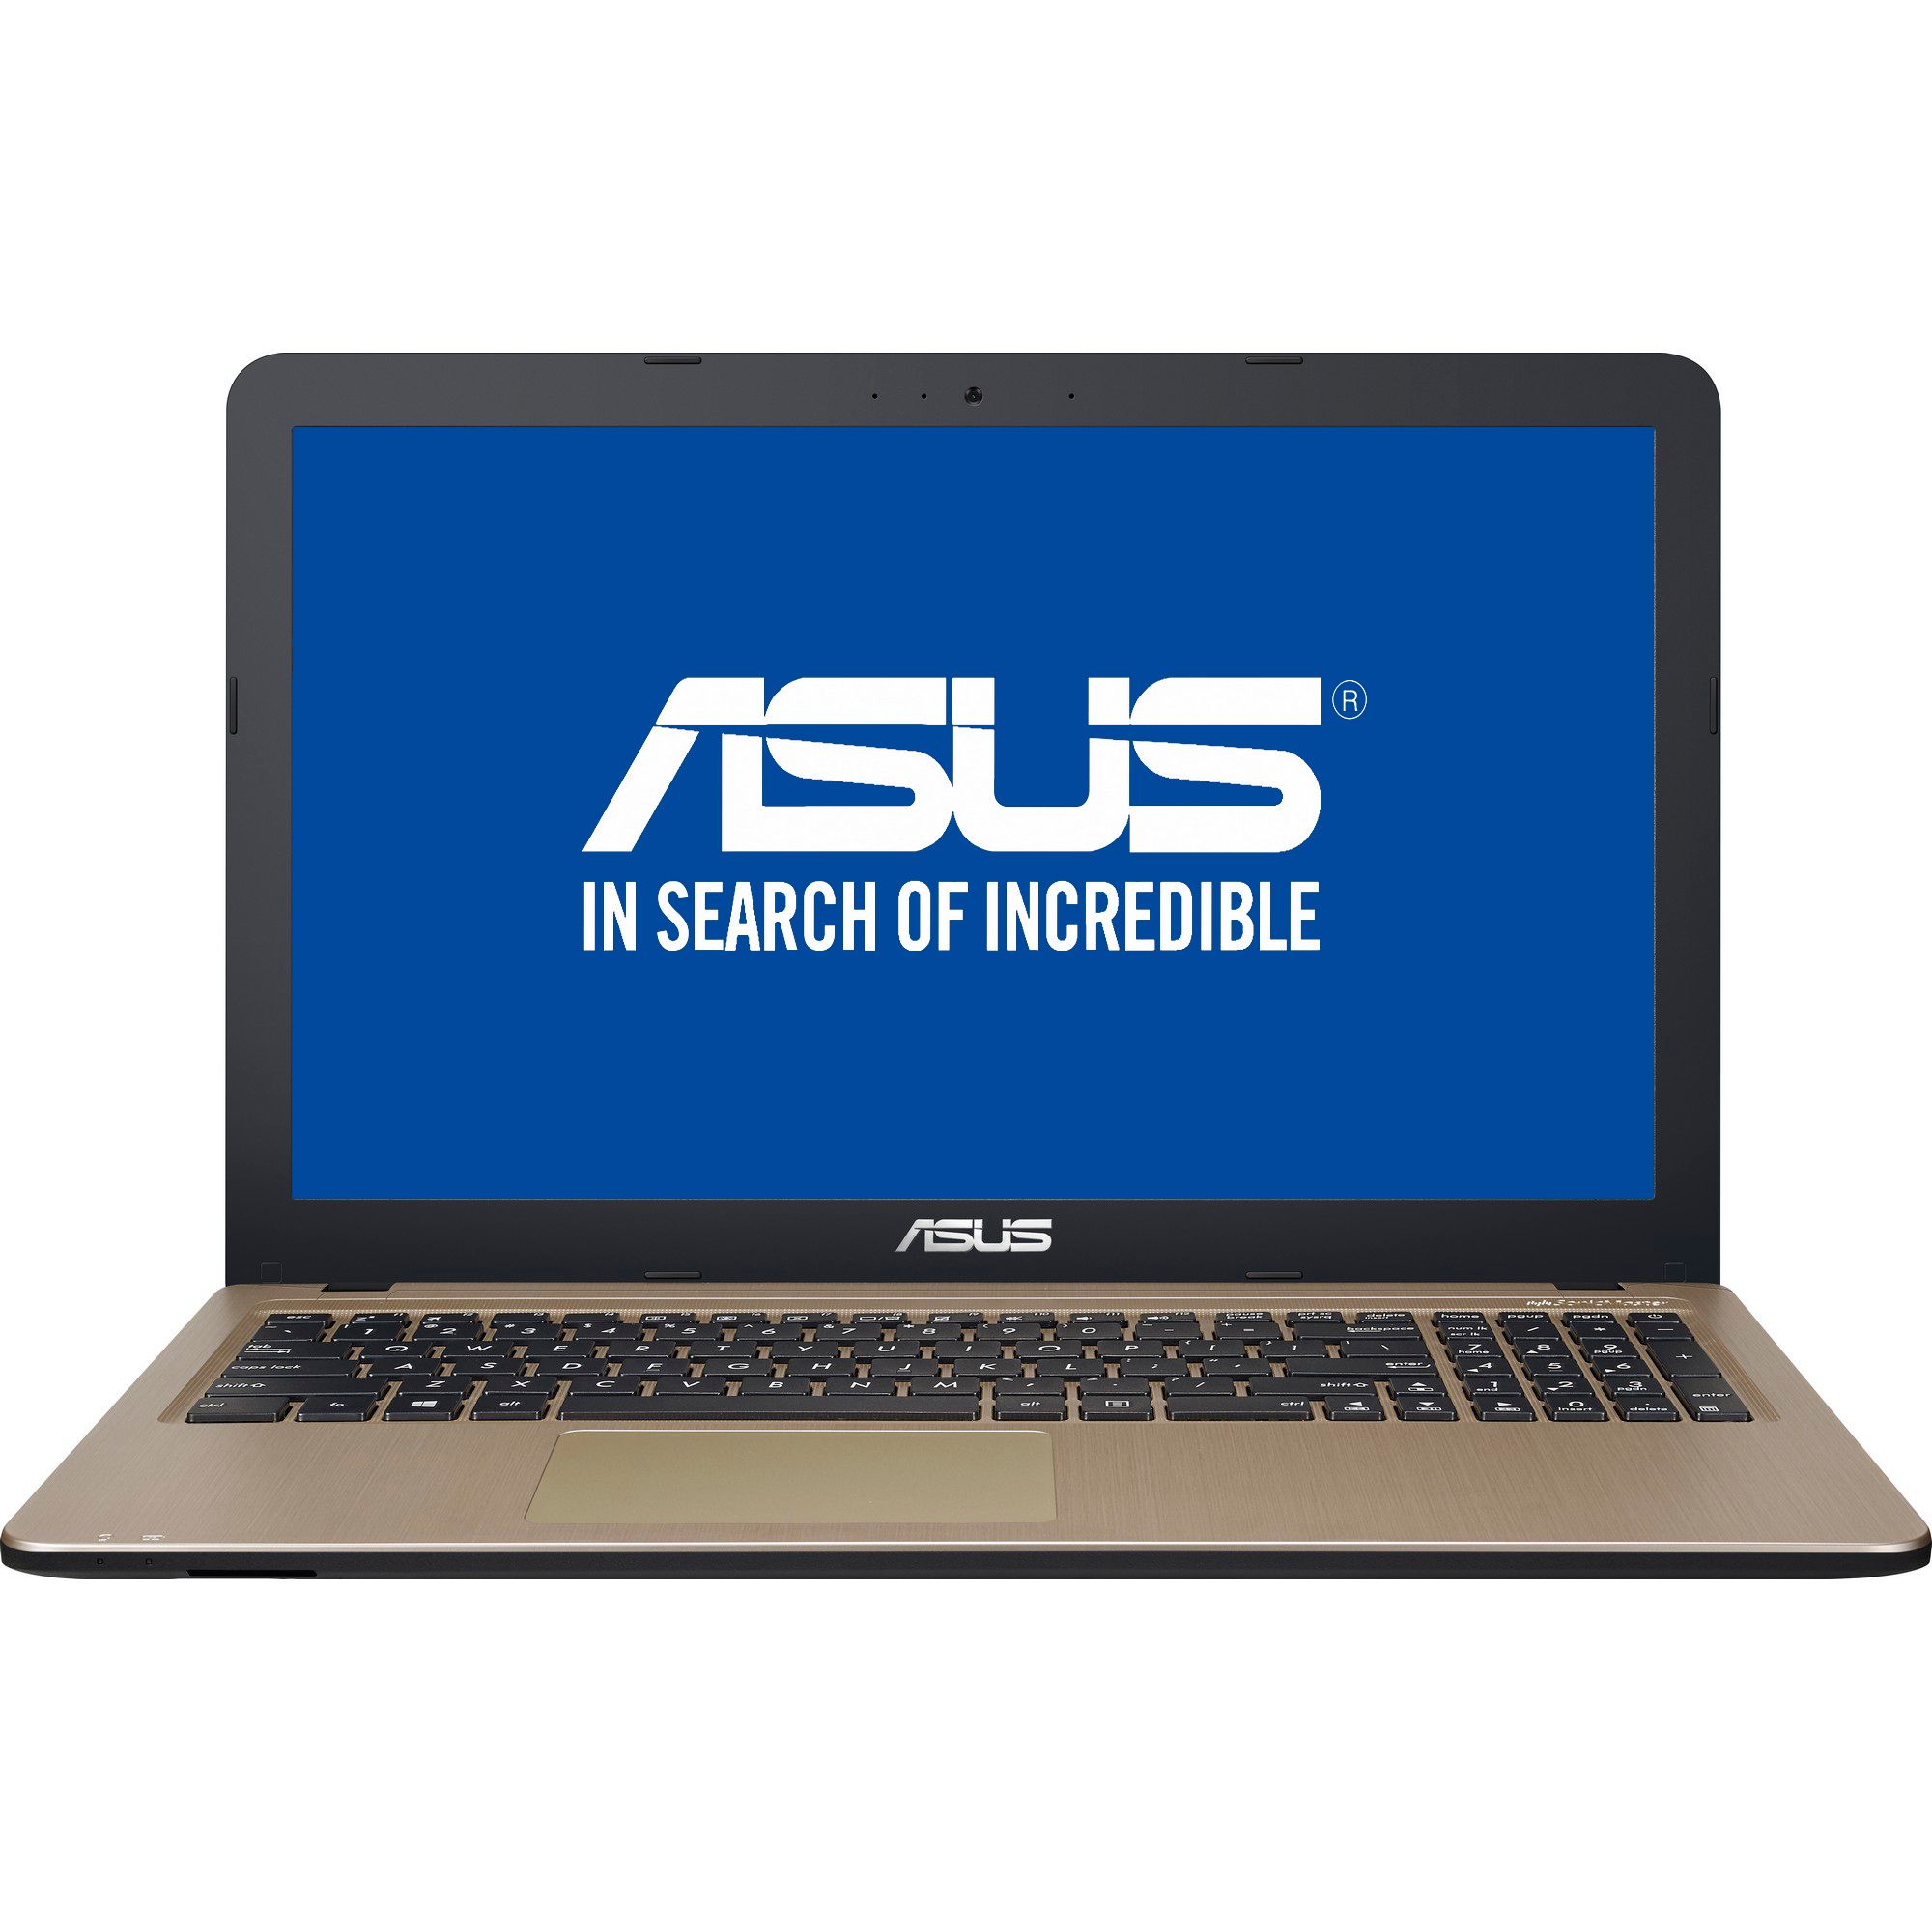 Notebook Asus VivoBook X540UA 15.6 Full HD Intel Core i7-8550U RAM 8GB SSD 256GB Endless